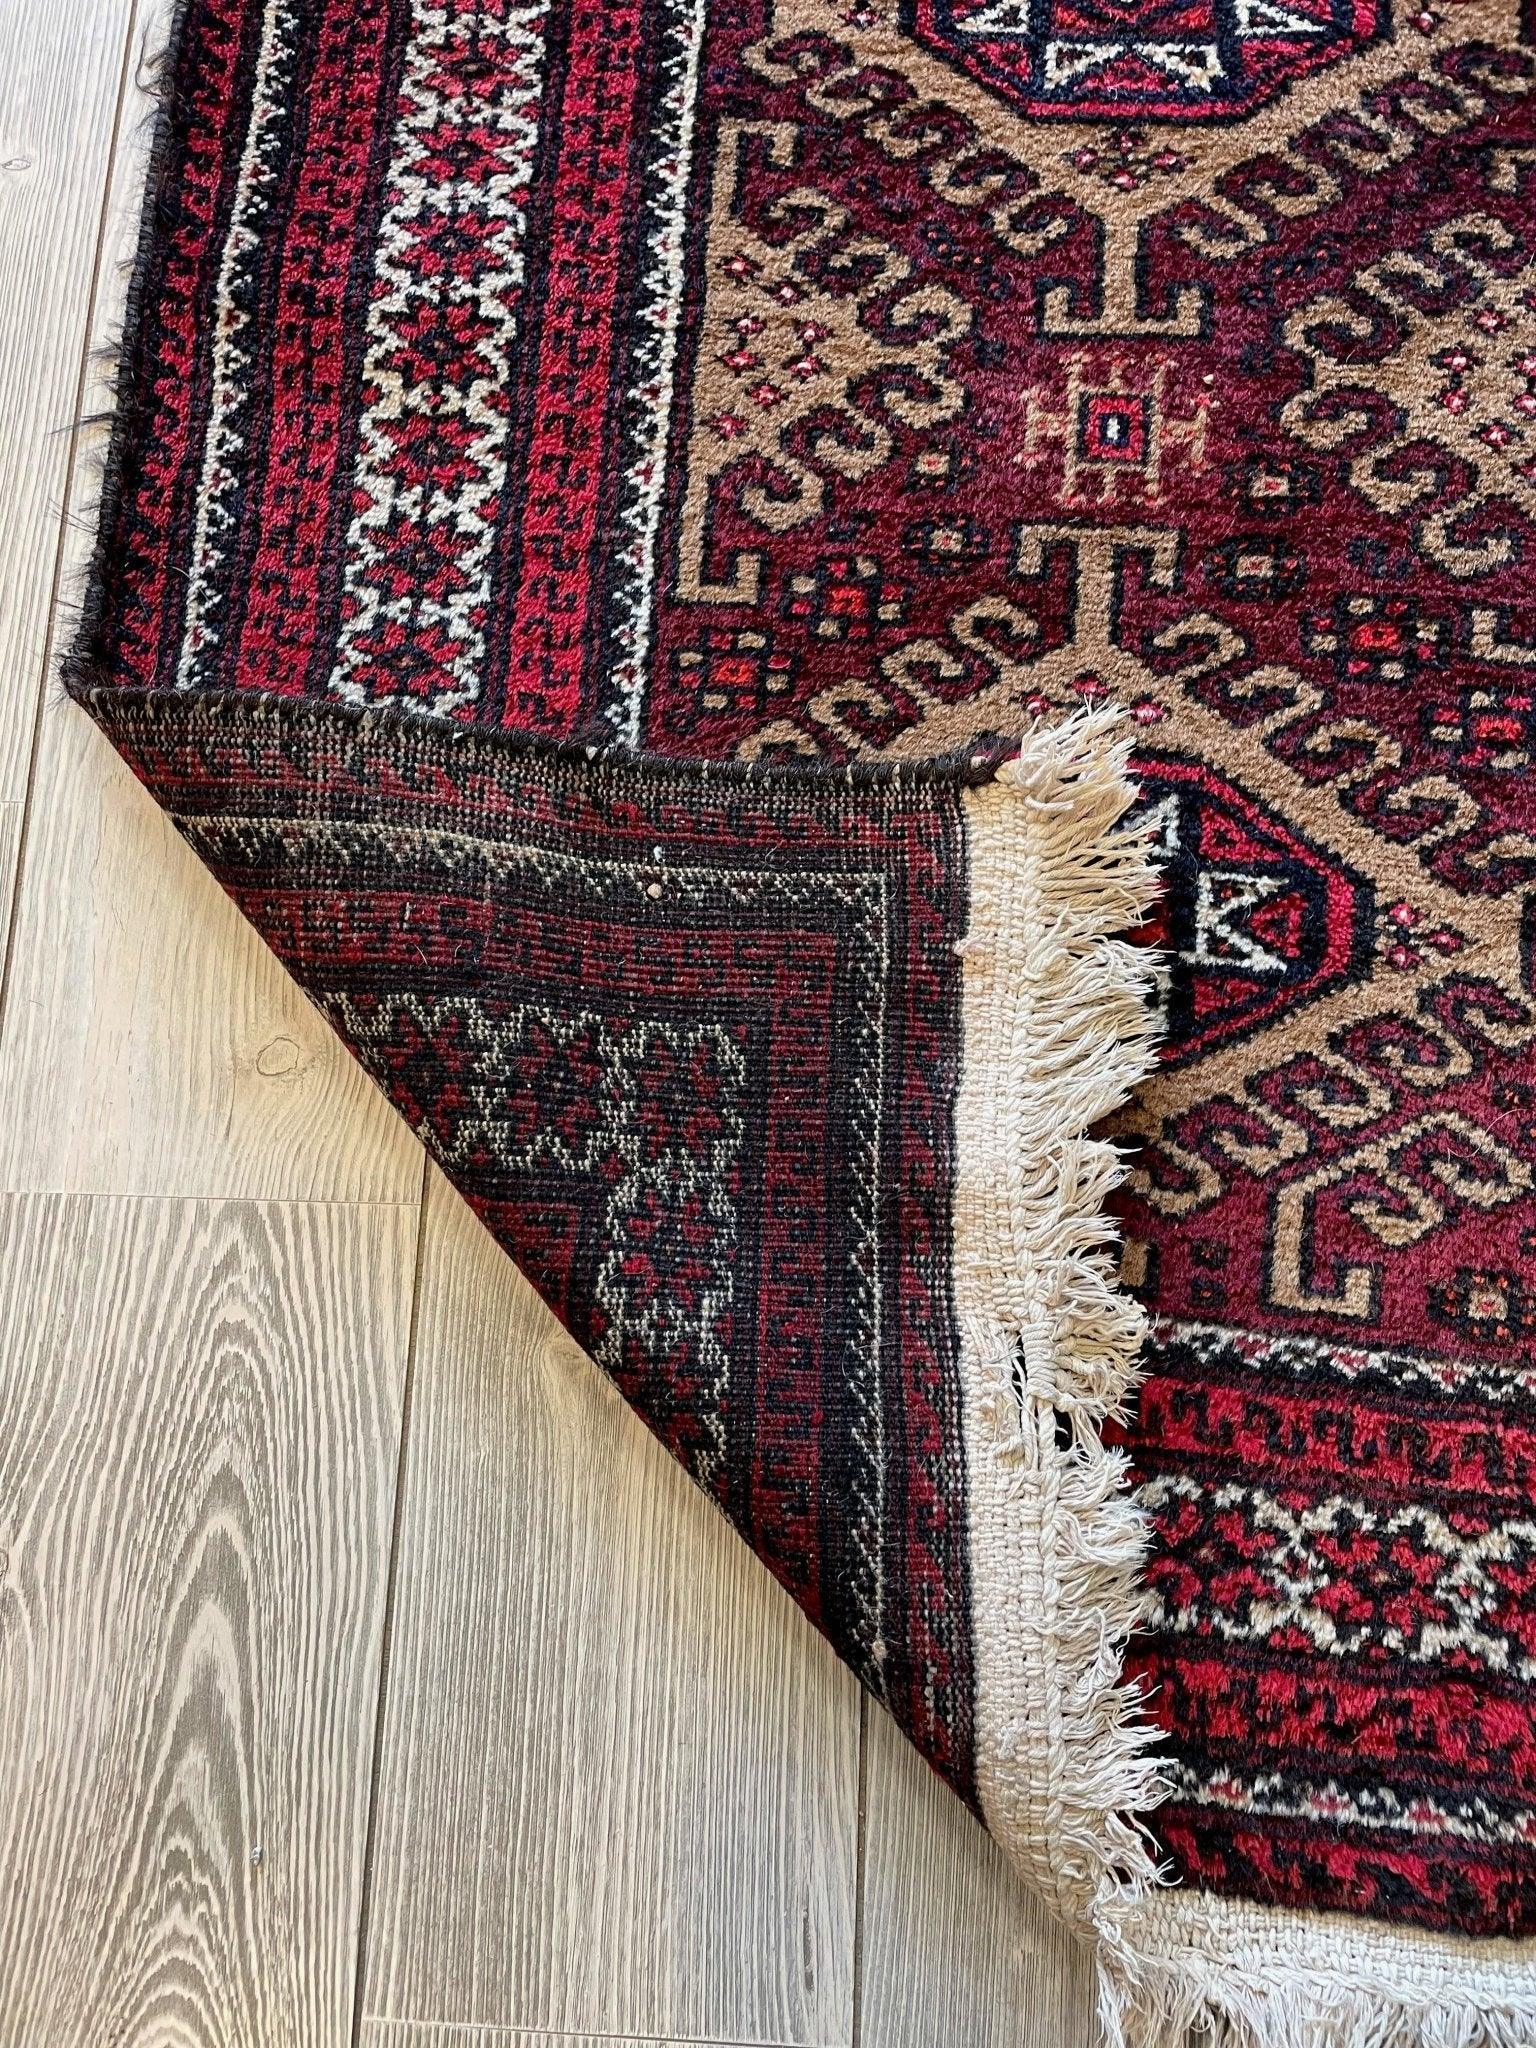 Antique Persian Handmade Baluch Rug 34''x48''